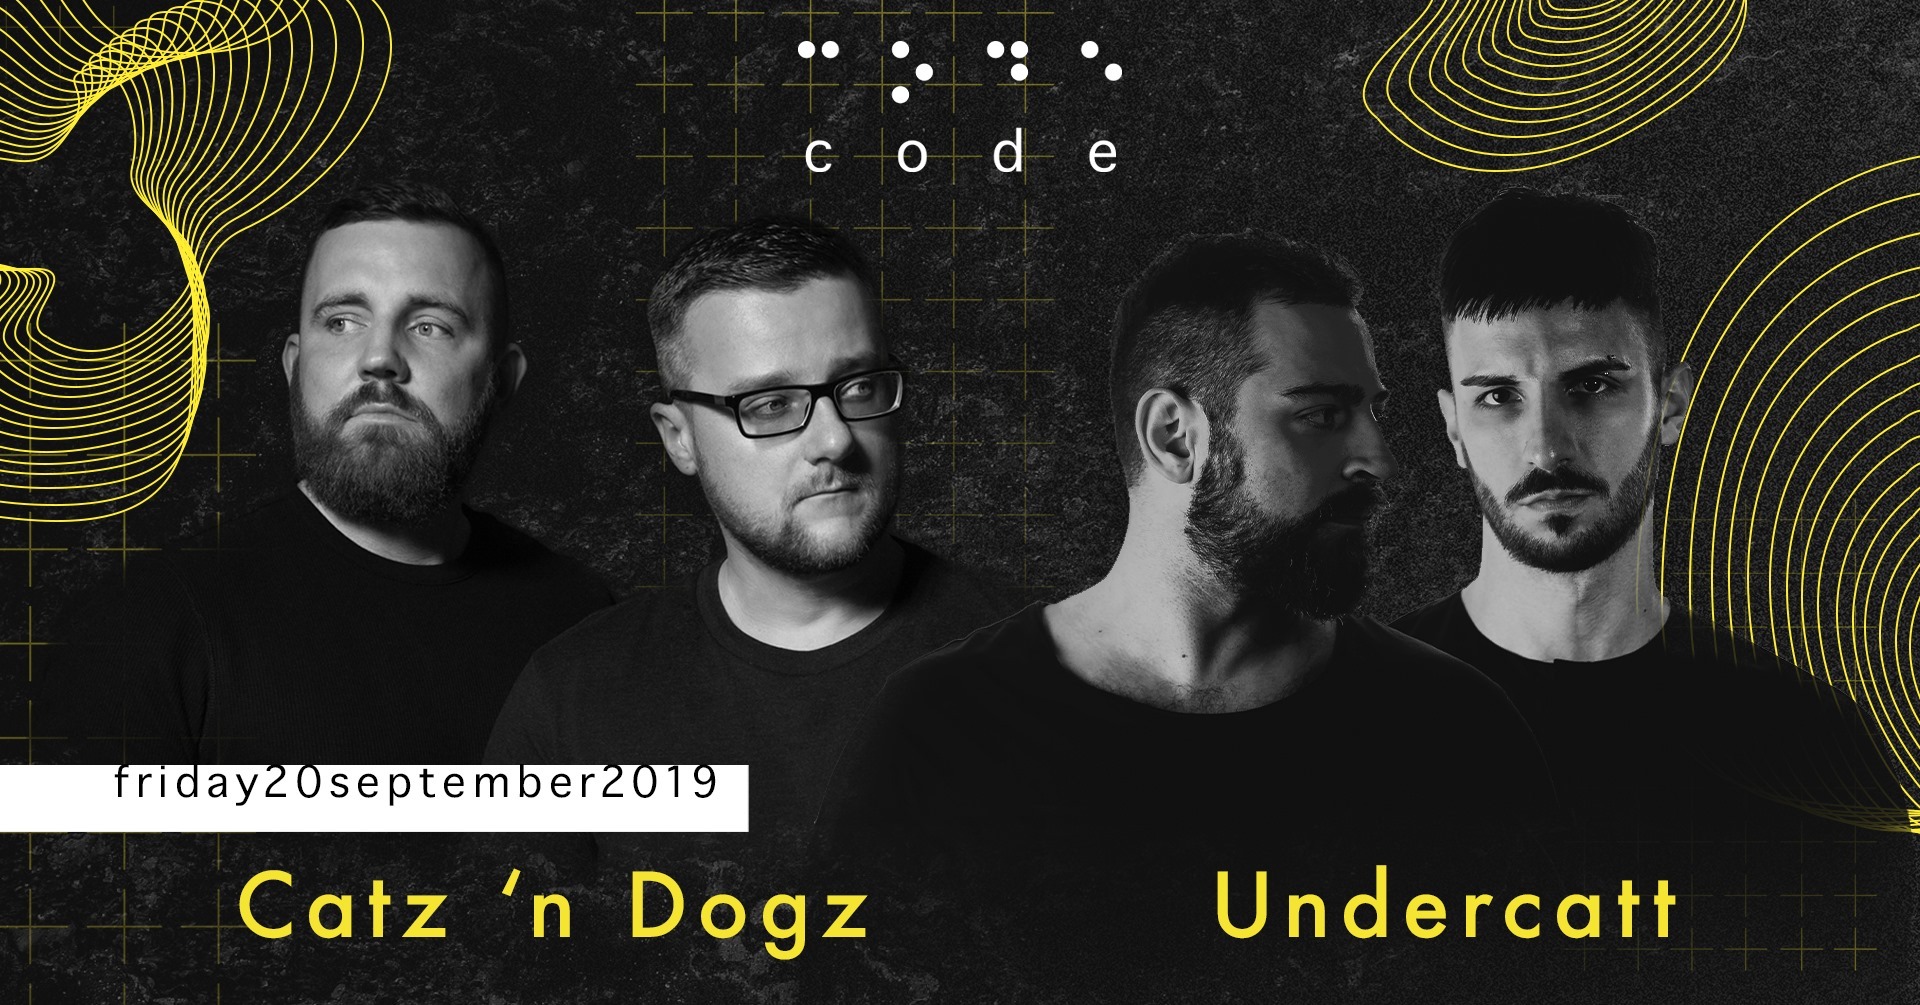 Code DXB – Catz n Dogz and Undercatt - Coming Soon in UAE